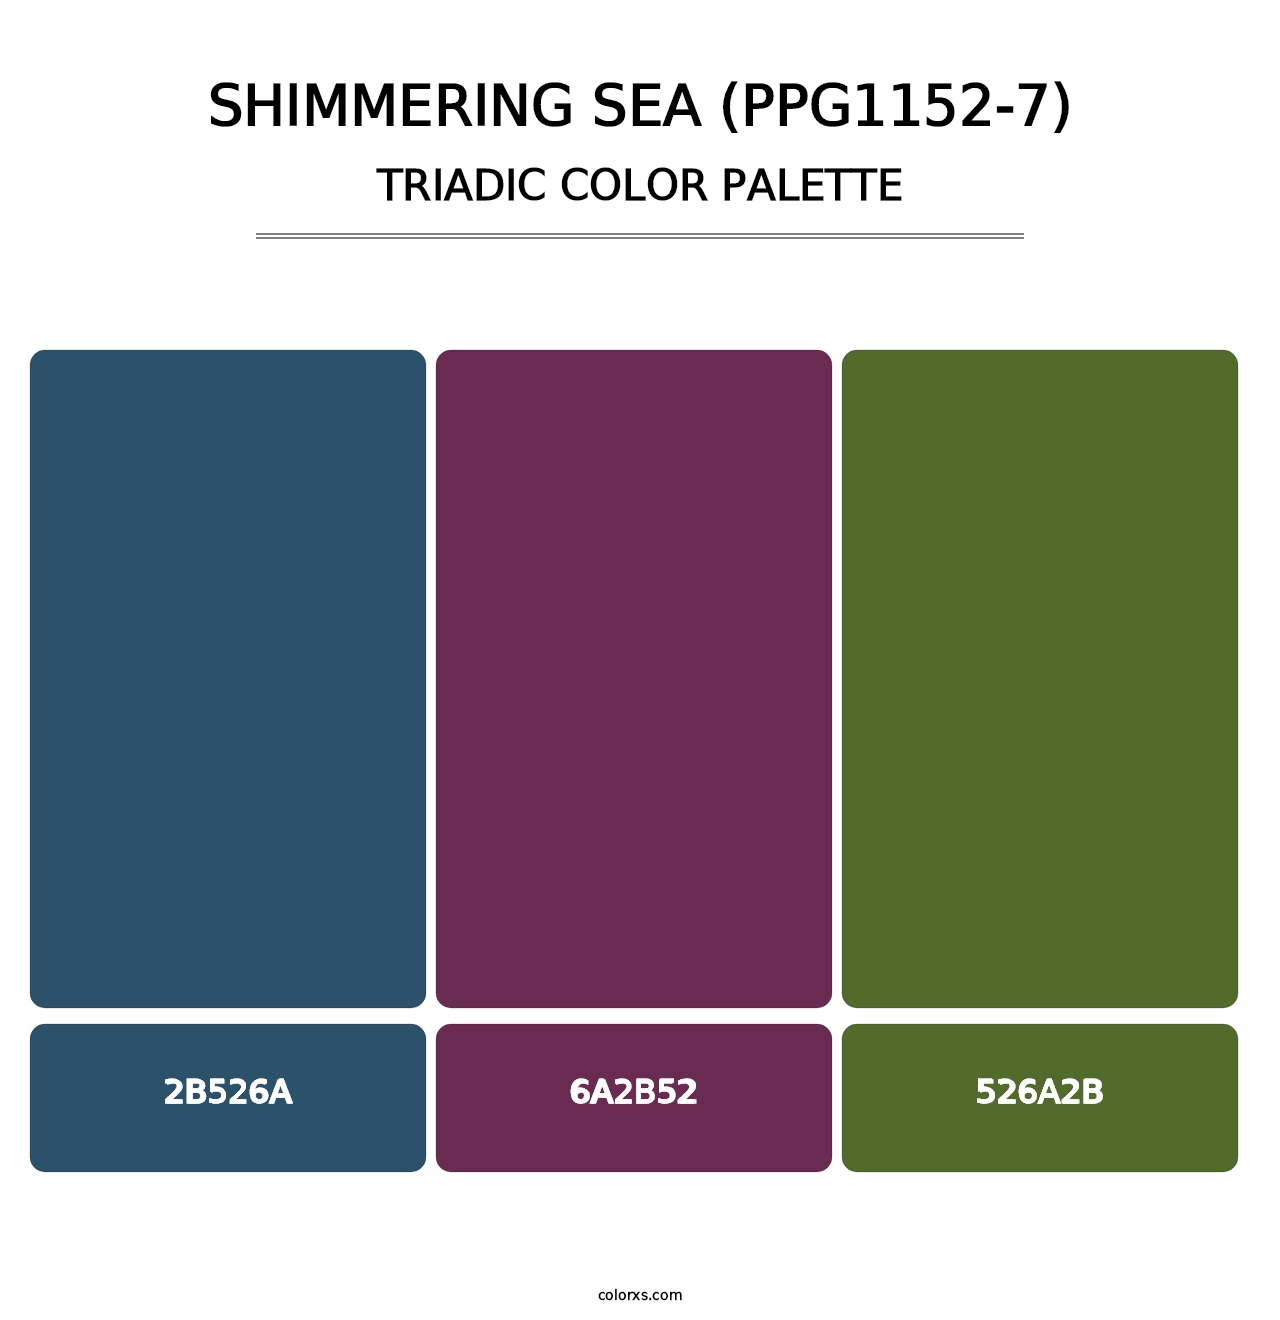 Shimmering Sea (PPG1152-7) - Triadic Color Palette